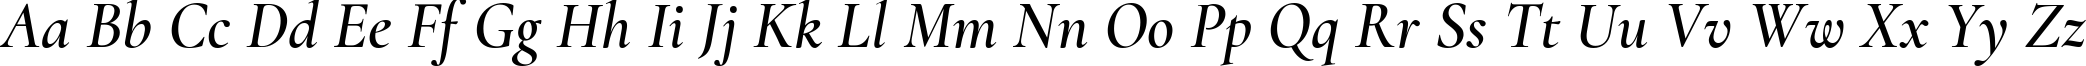 Пример написания английского алфавита шрифтом Cormorant SemiBold Italic